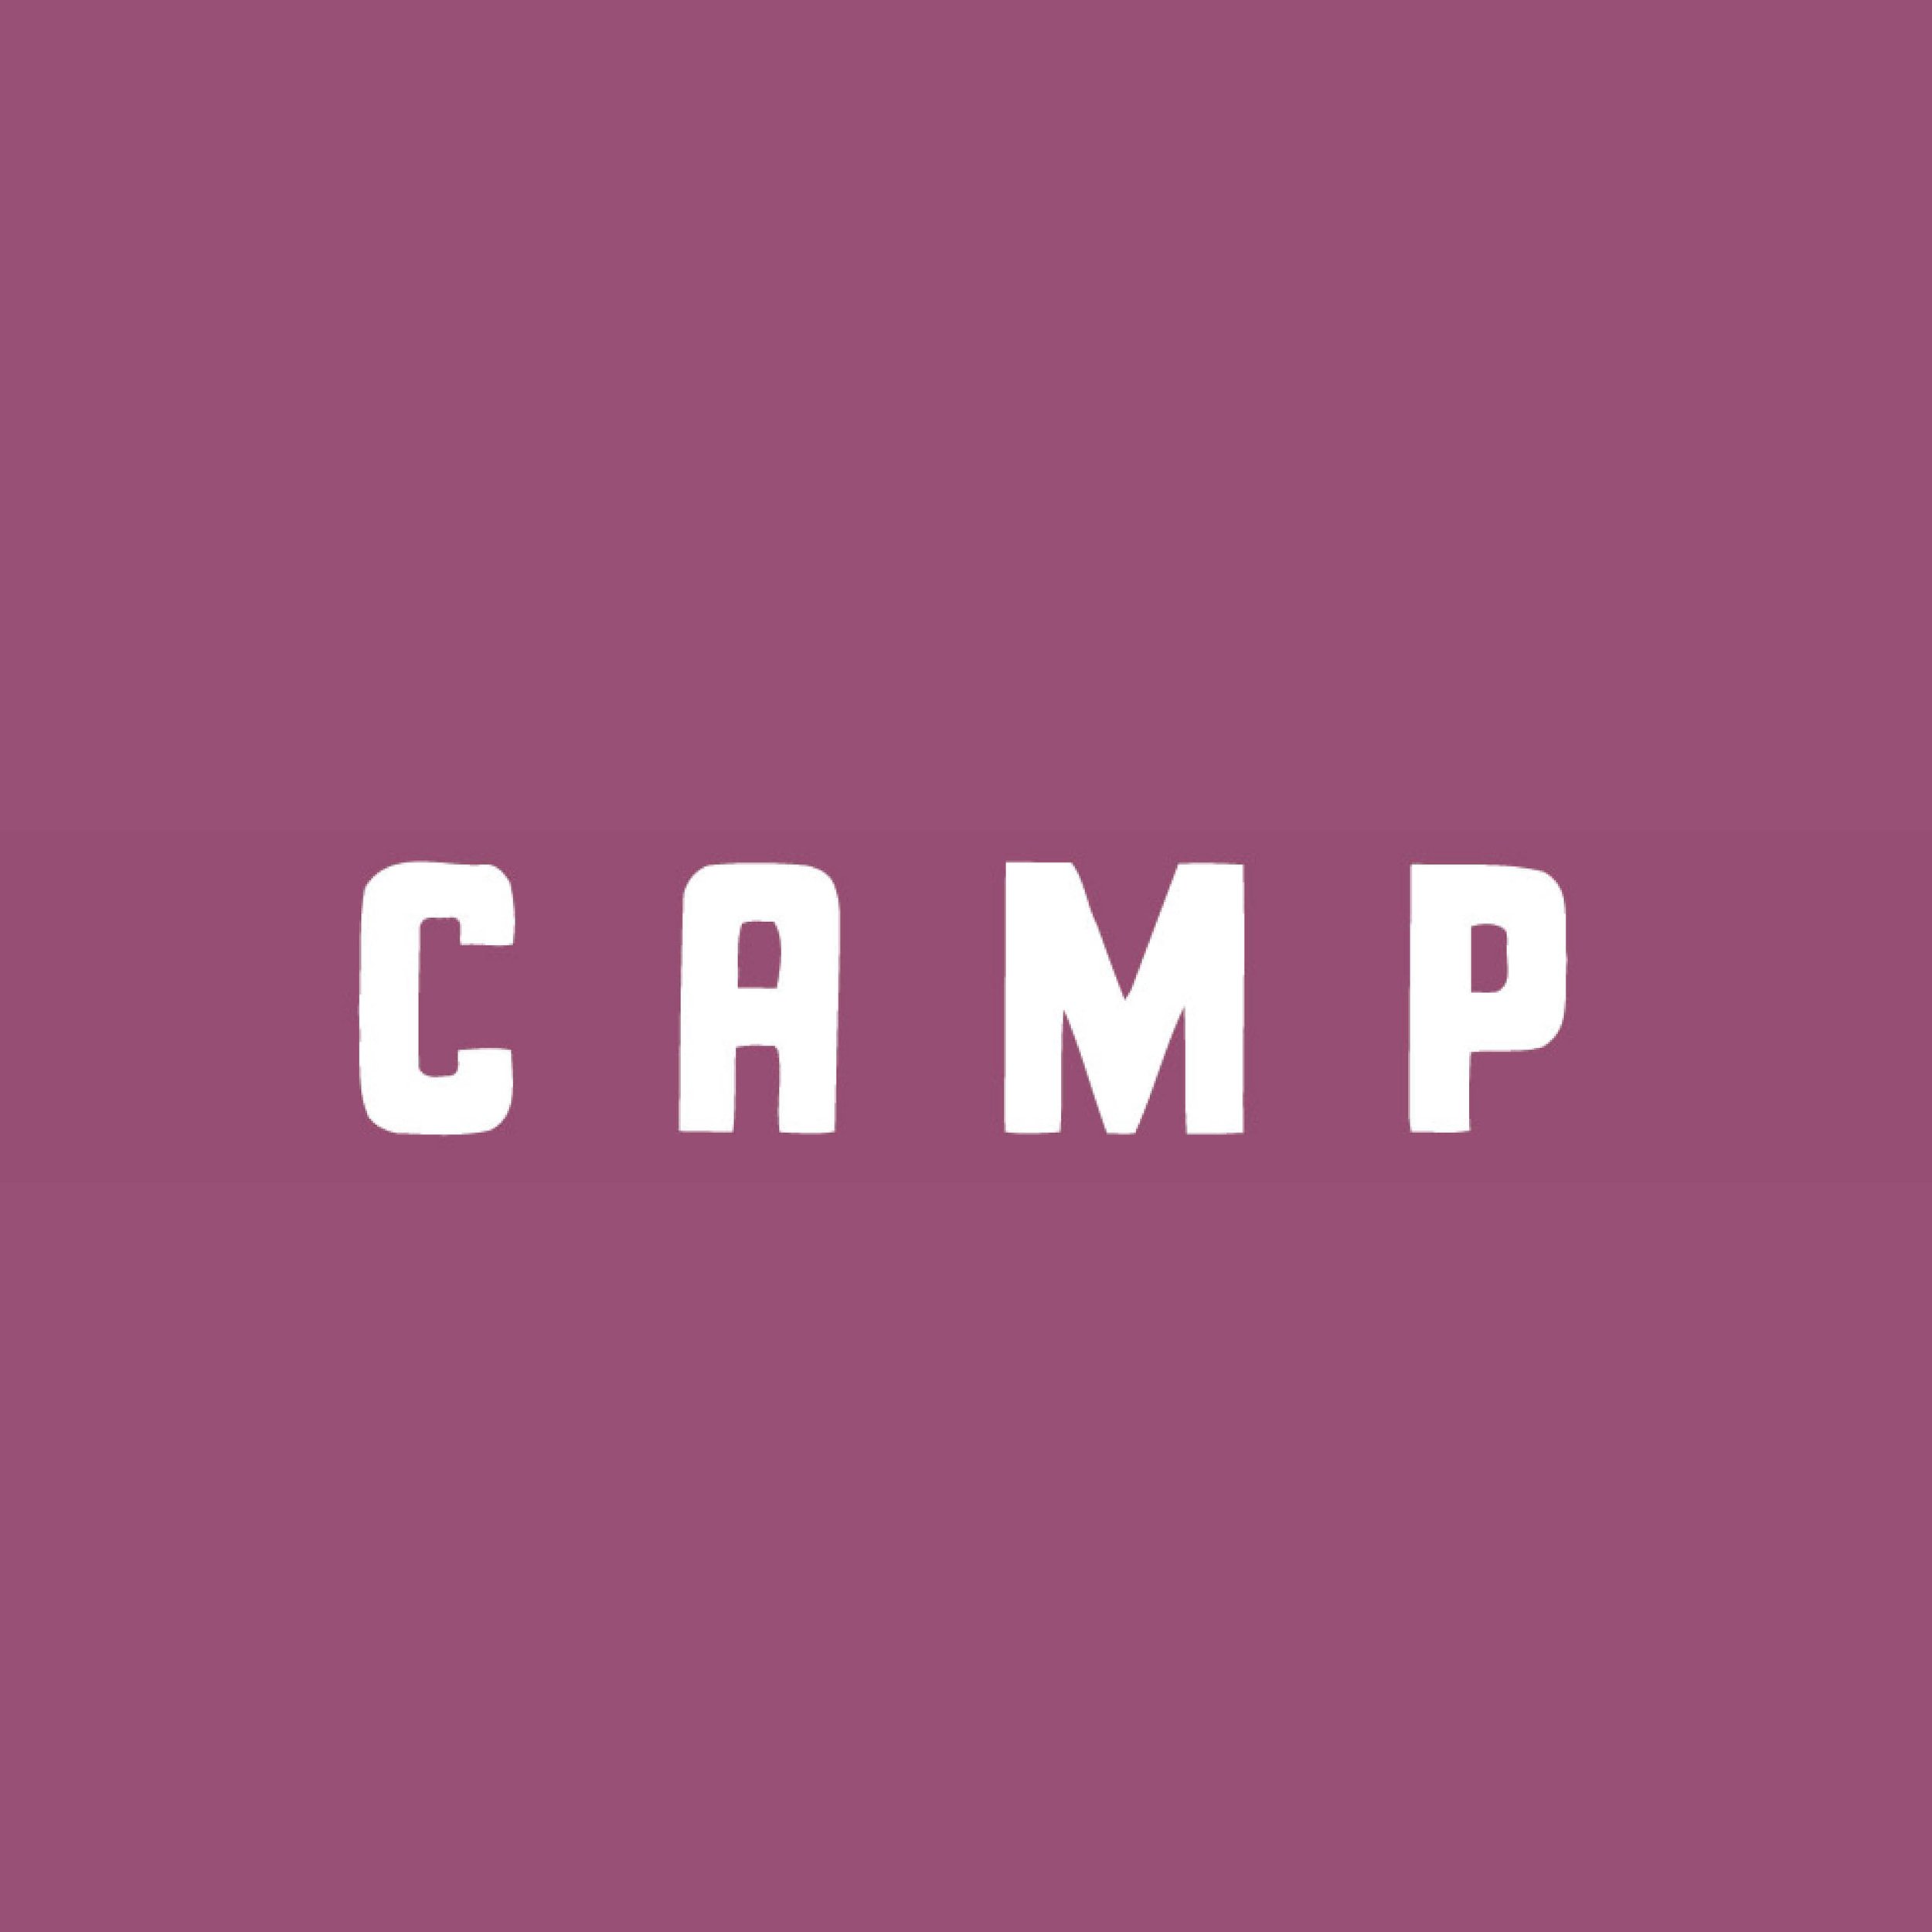 Camp tiles.jpg